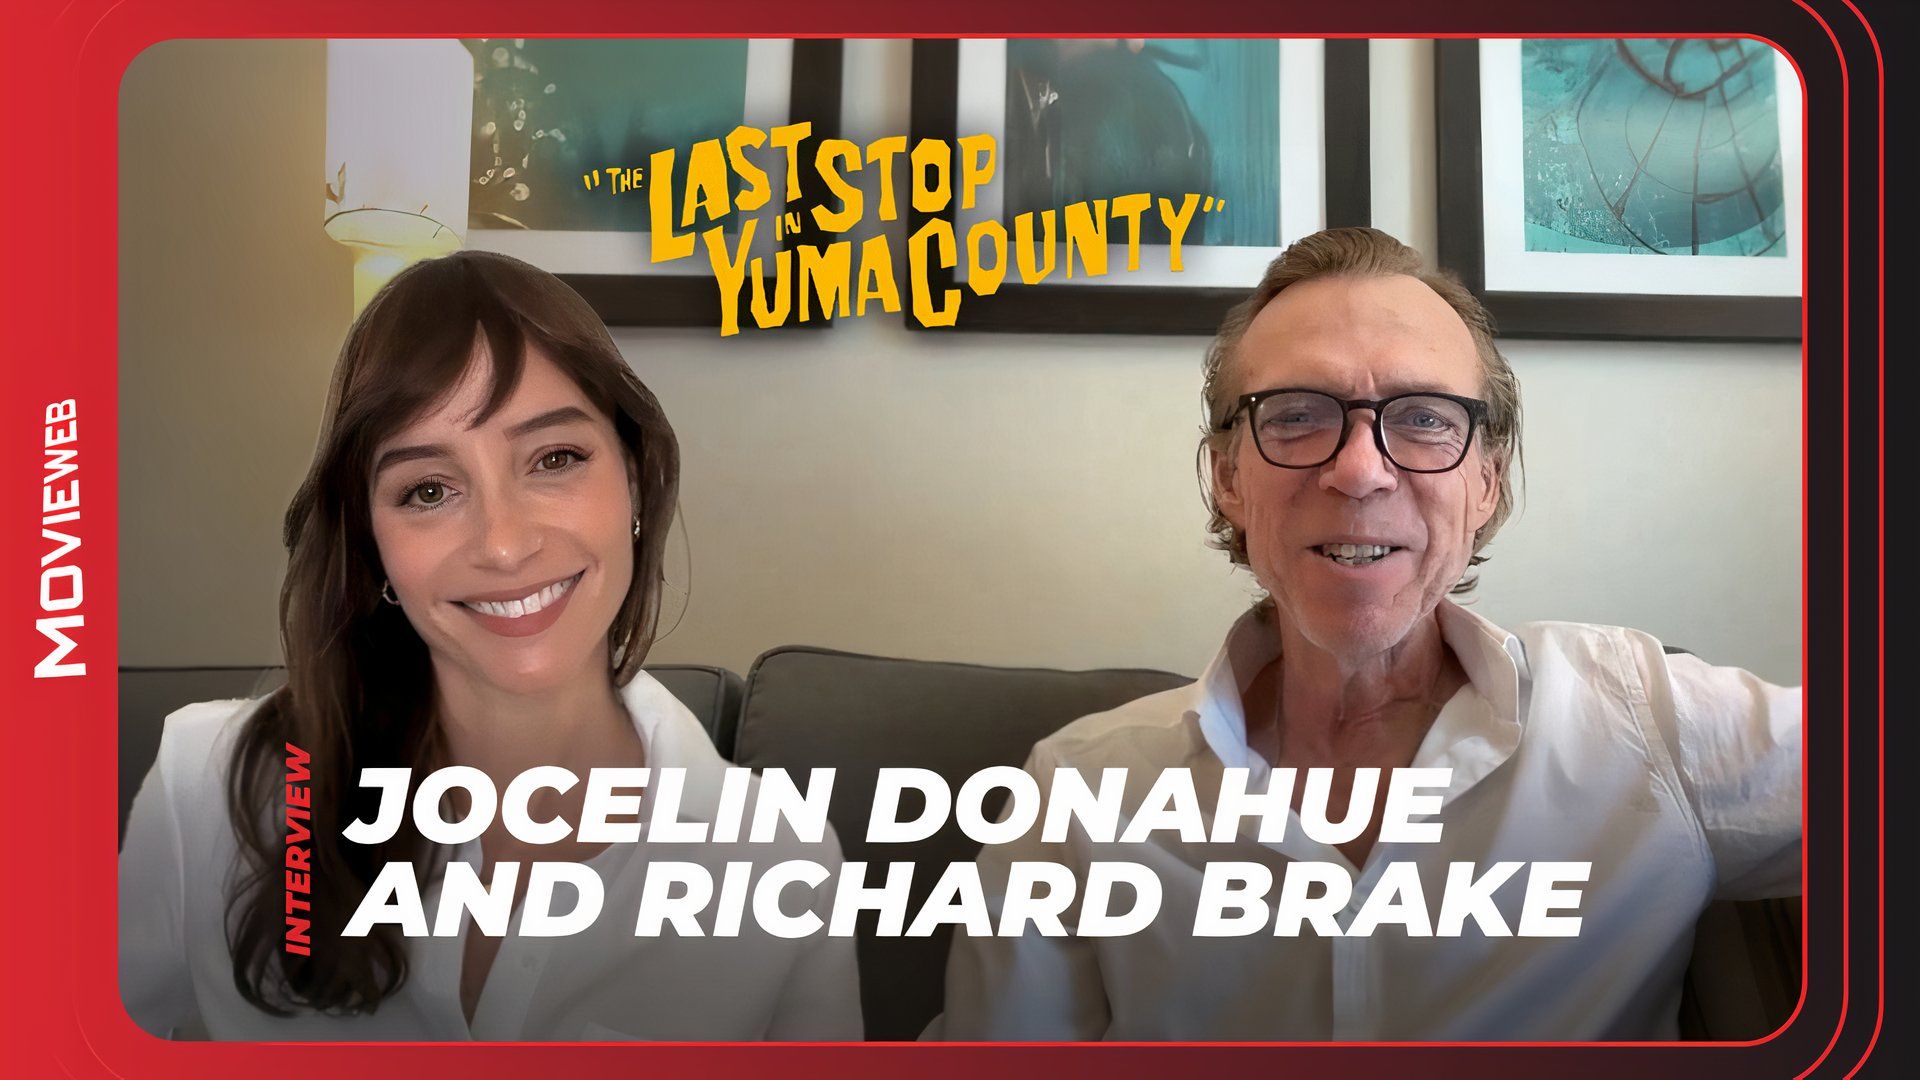 The Last Stop in Yuma County - Jocelin Donahue and Richard Brake